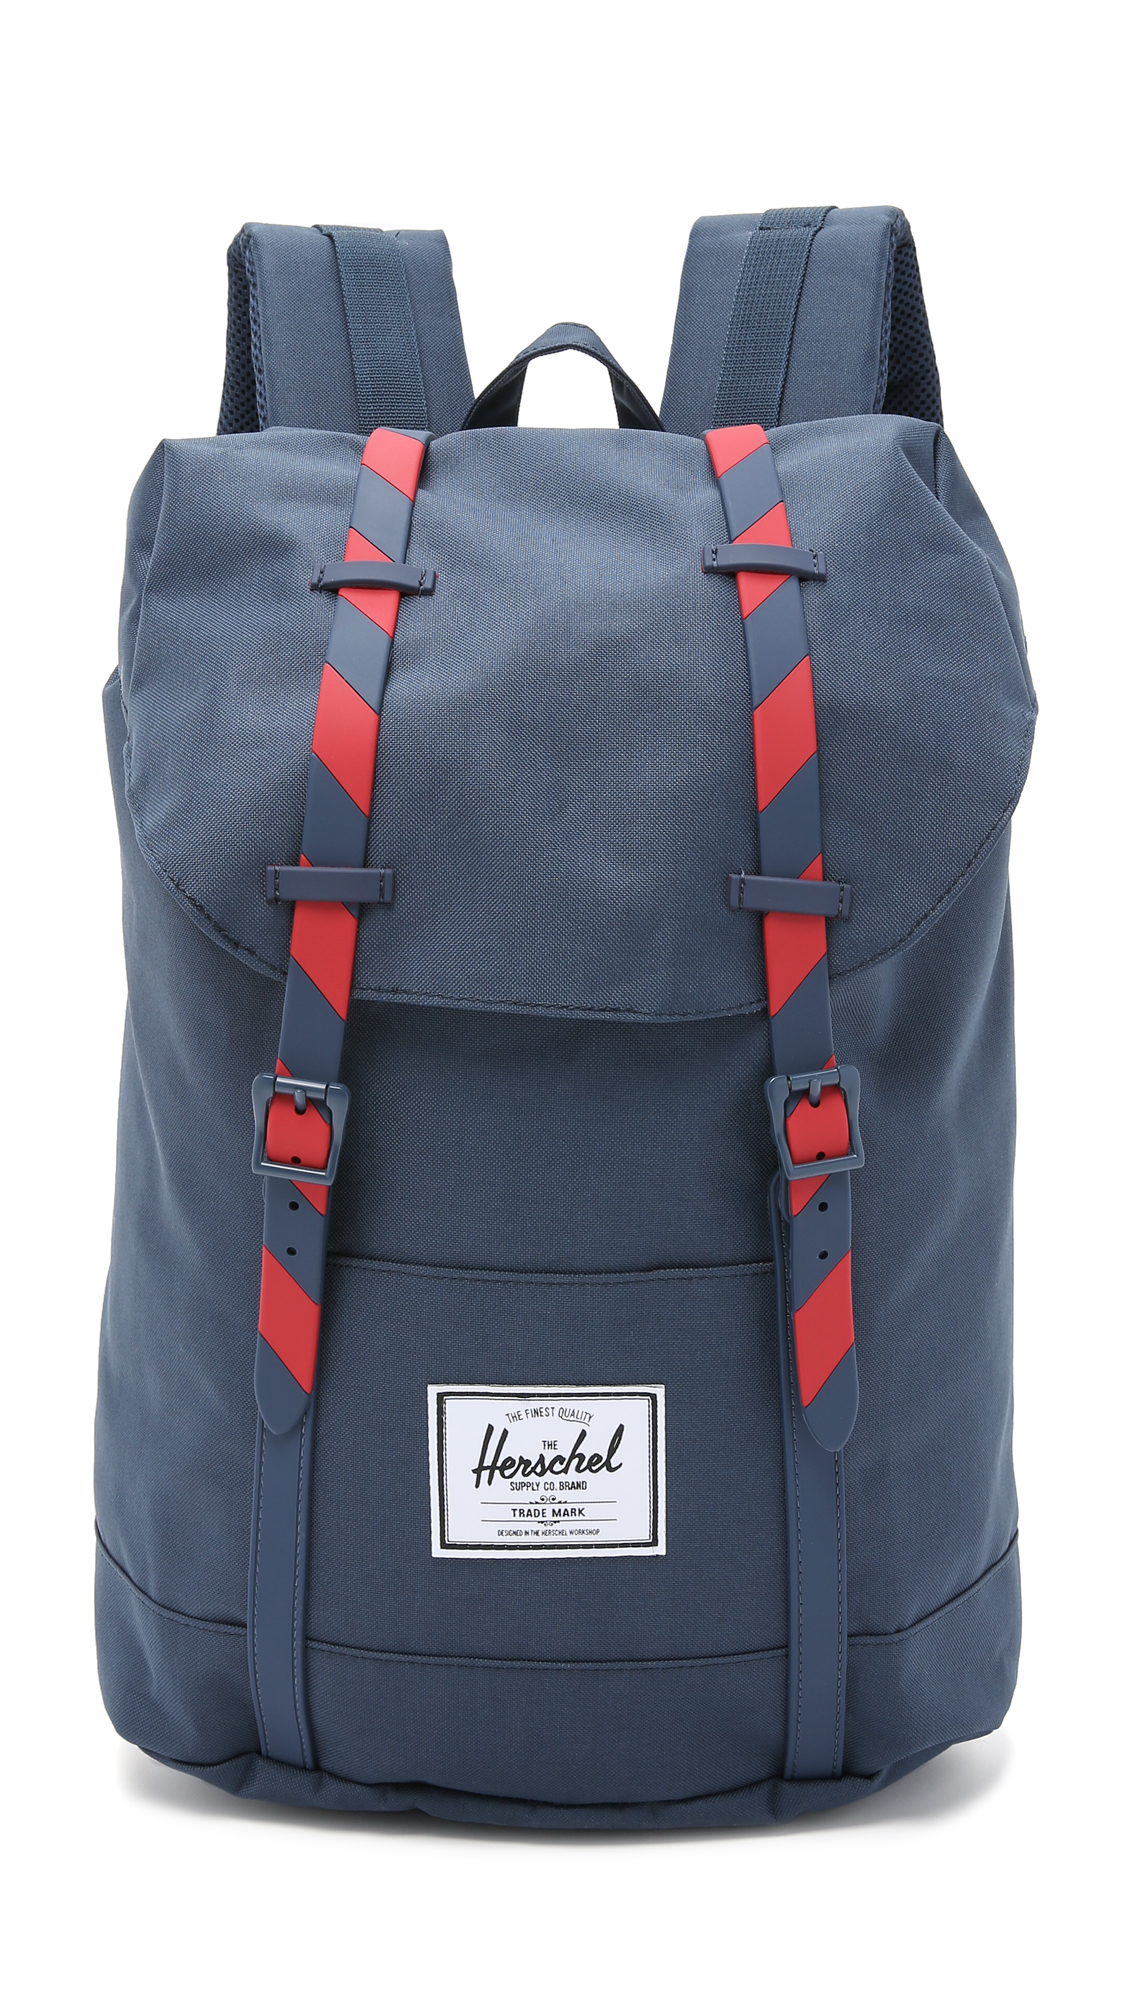 Lyst - Herschel Supply Co. Retreat Backpack - Navy/red Stripe in Blue